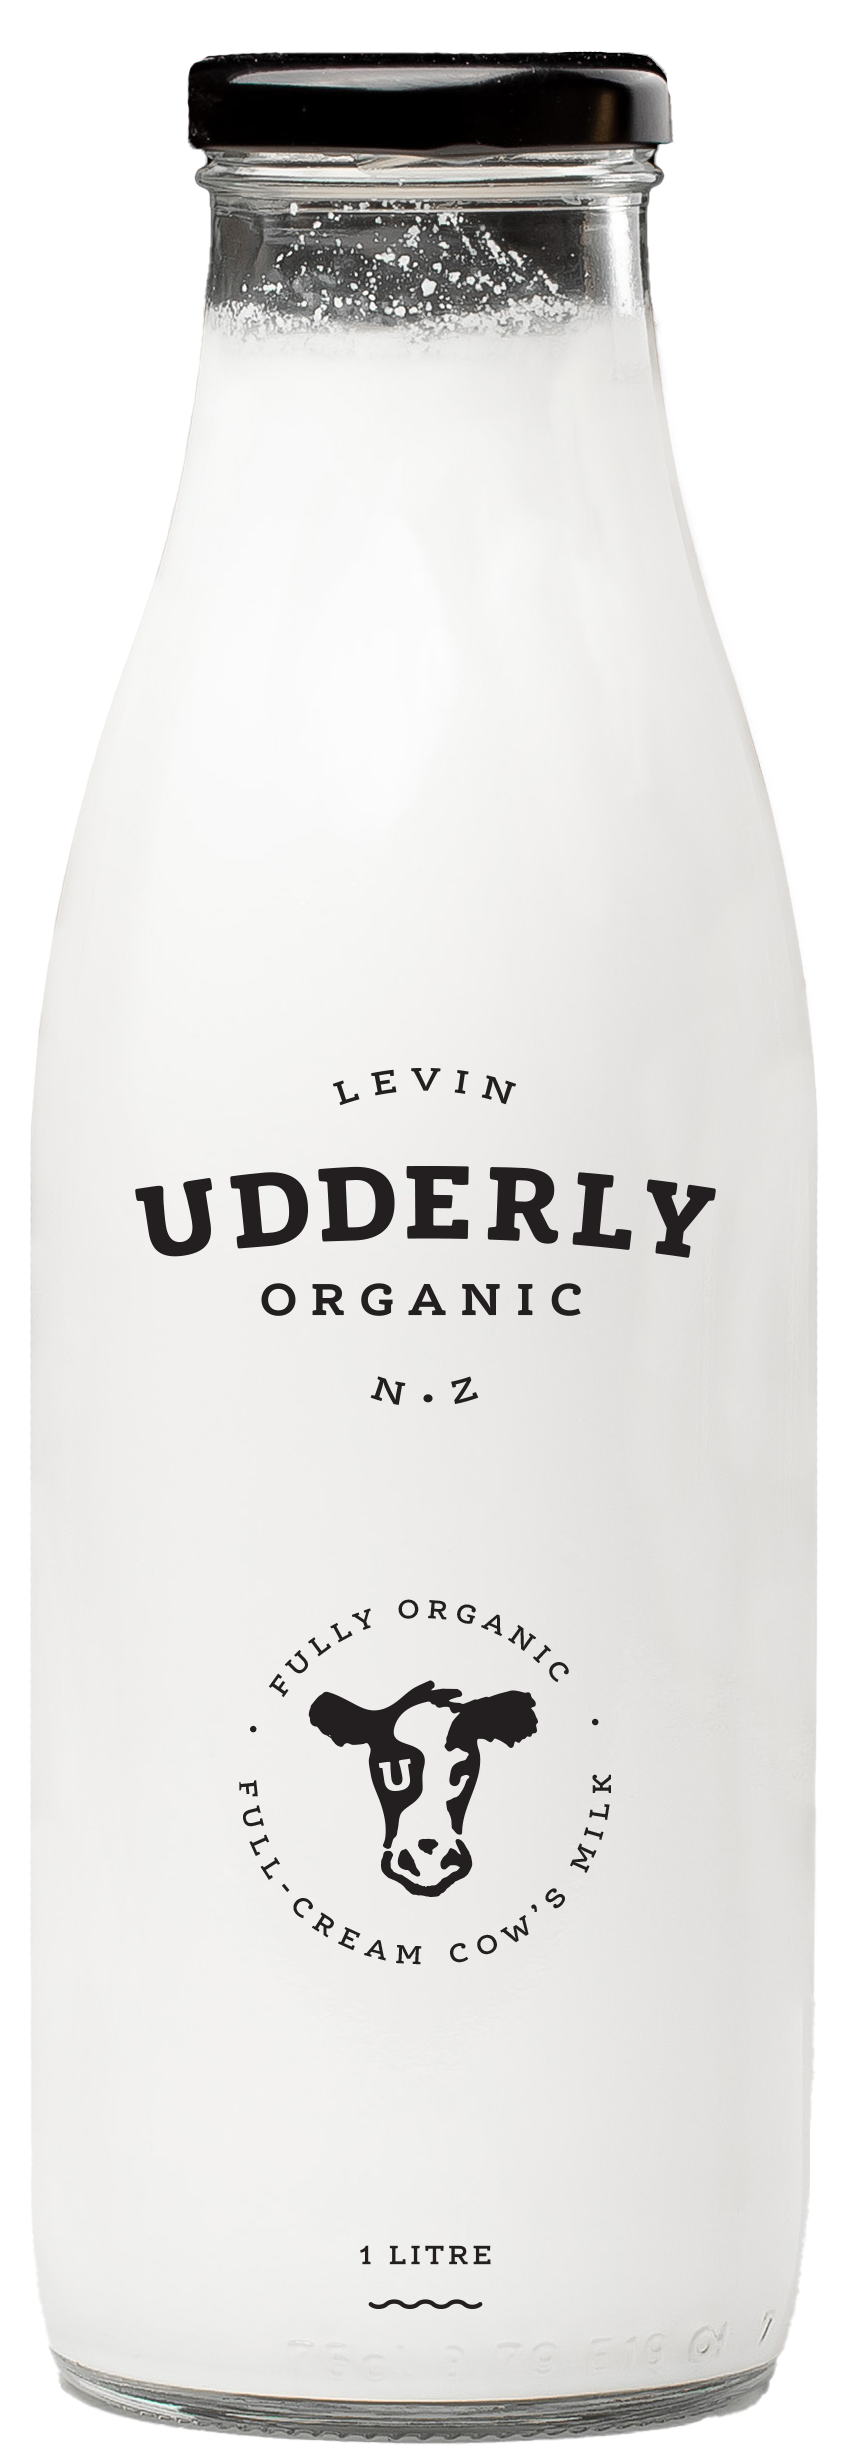 Udderly Bottle